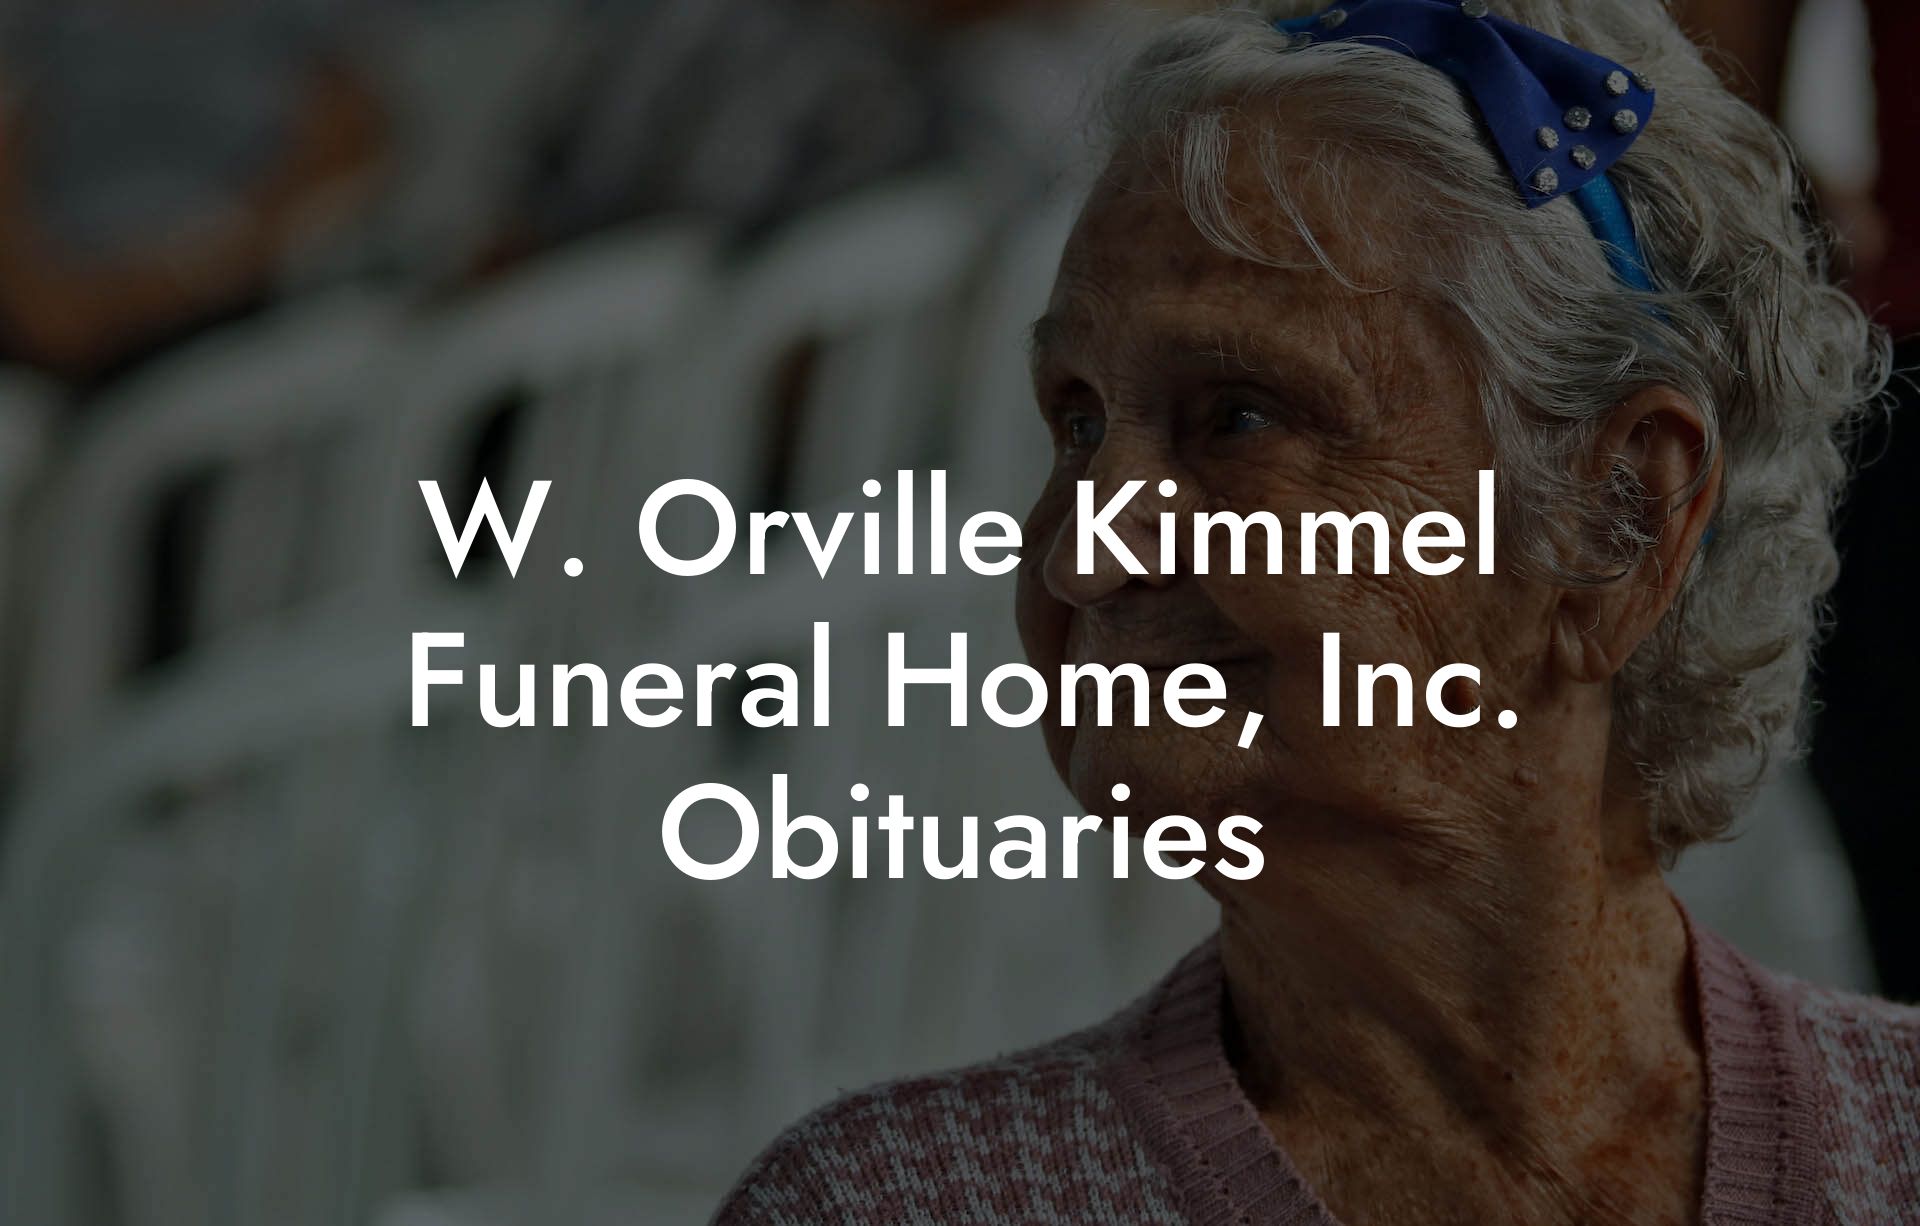 W. Orville Kimmel Funeral Home, Inc. Obituaries